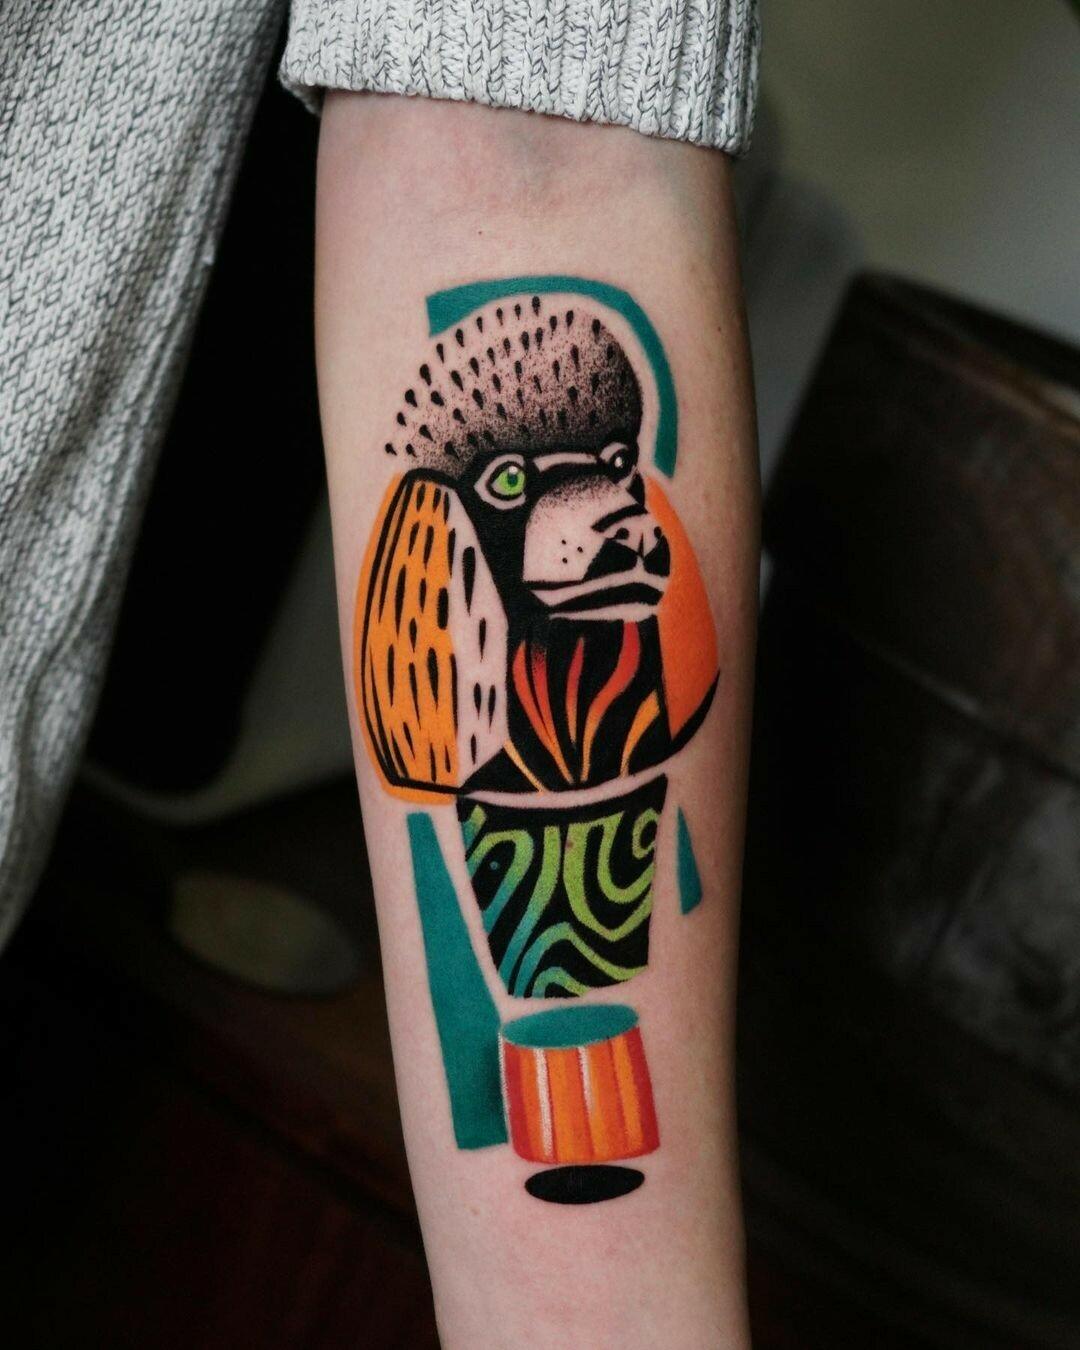 Inksearch tattoo Marta Kudu